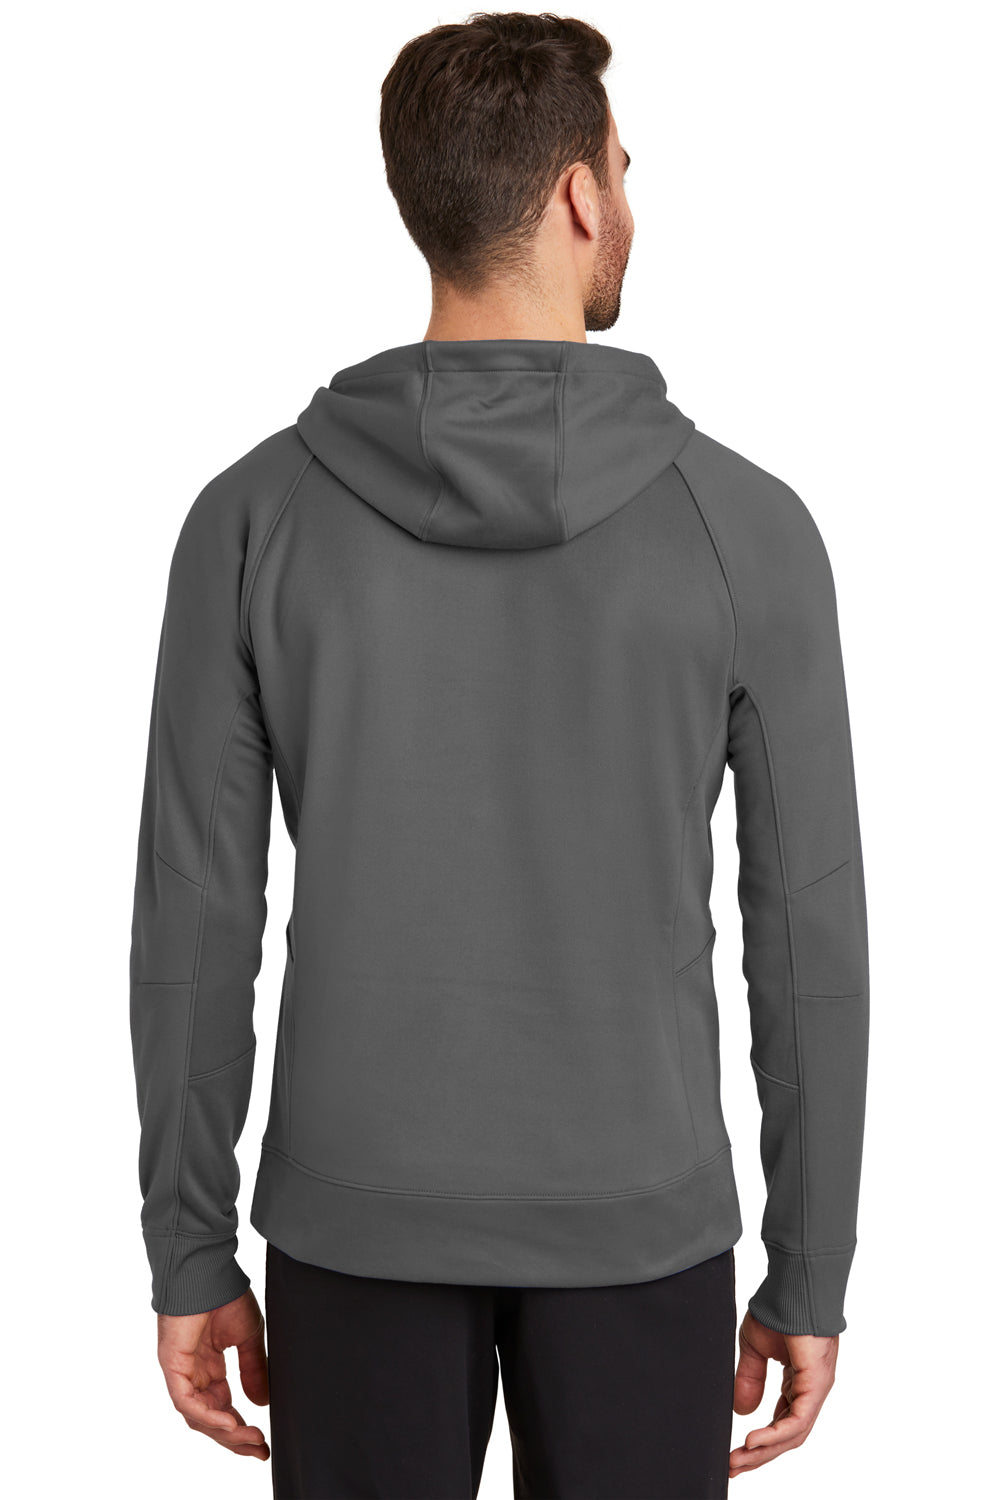 New Era NEA520 Mens Venue Fleece Hooded Sweatshirt Hoodie Graphite Grey Back